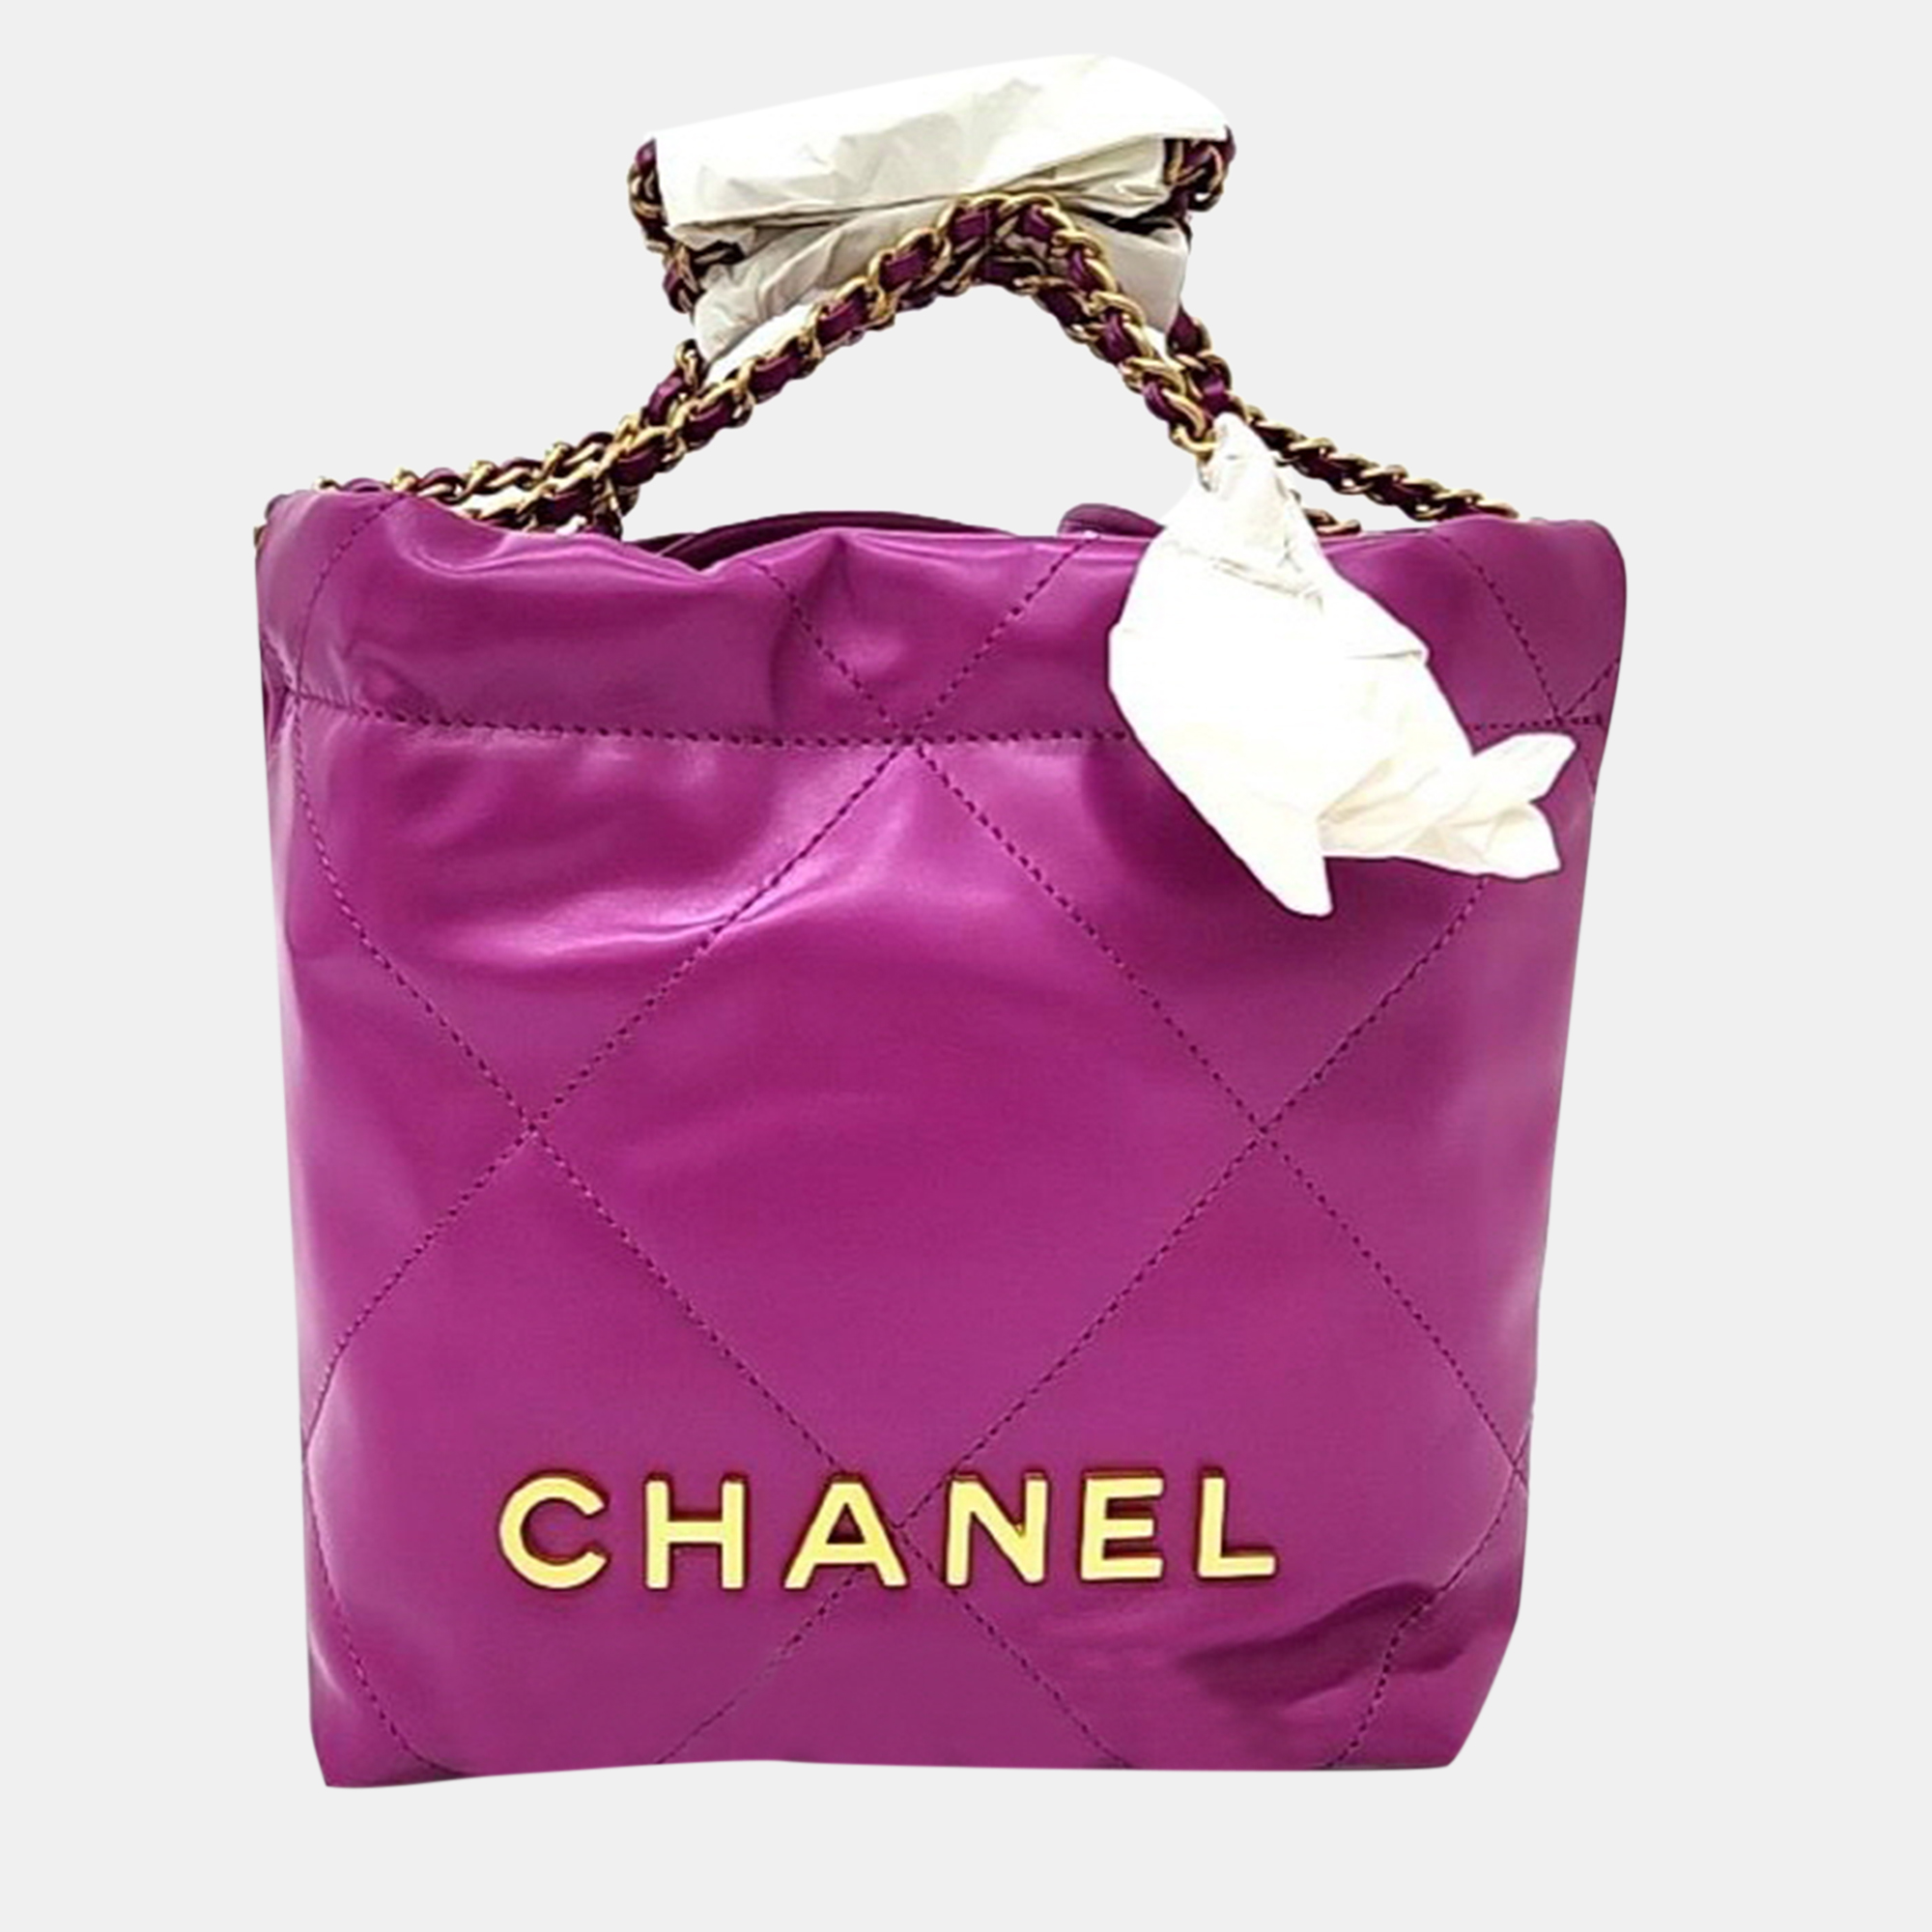 Chanel purple leather 22 mini bag